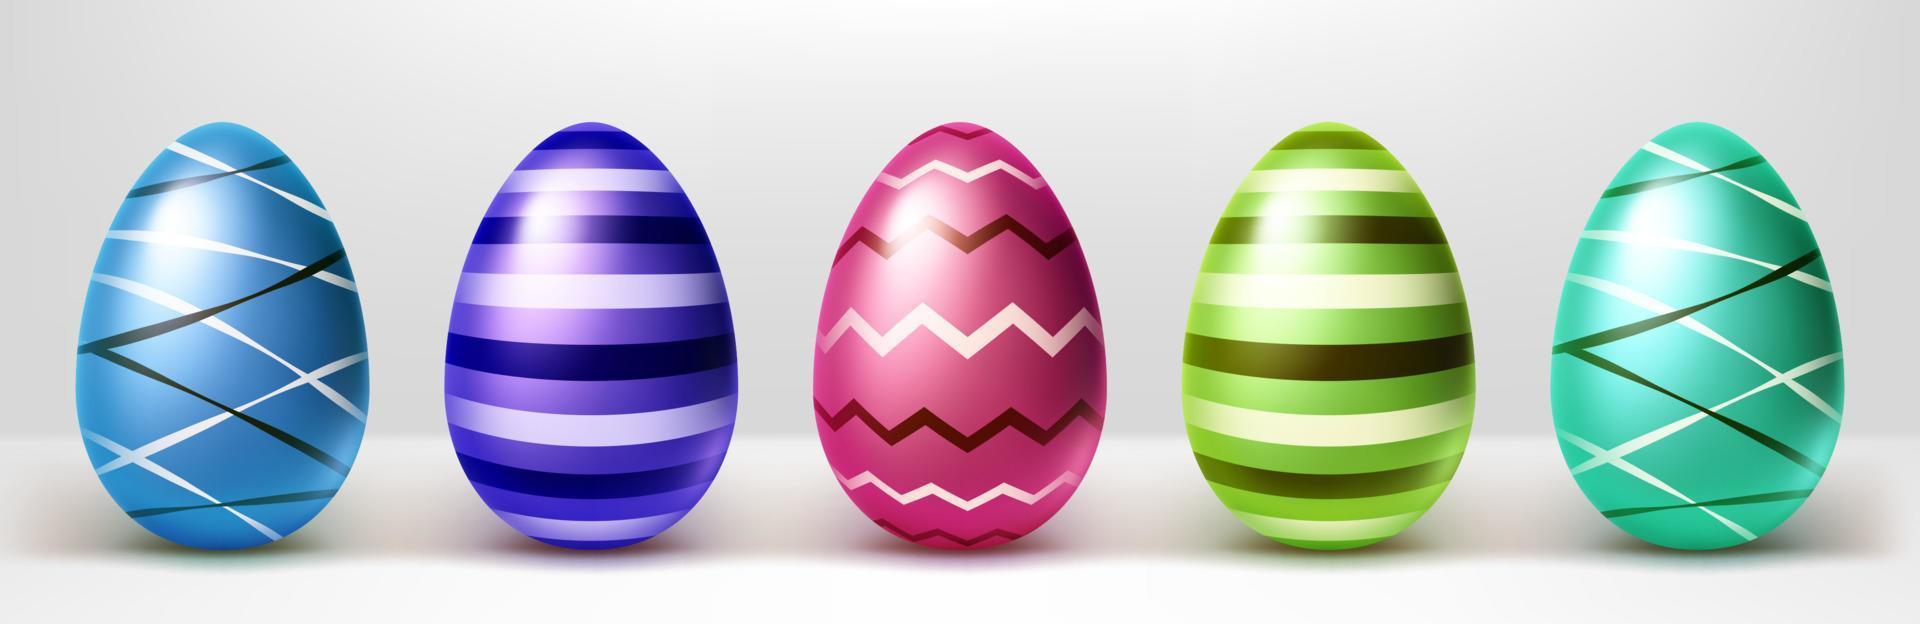 fila de huevos de pascua coloridos, objetos vectoriales aislados vector